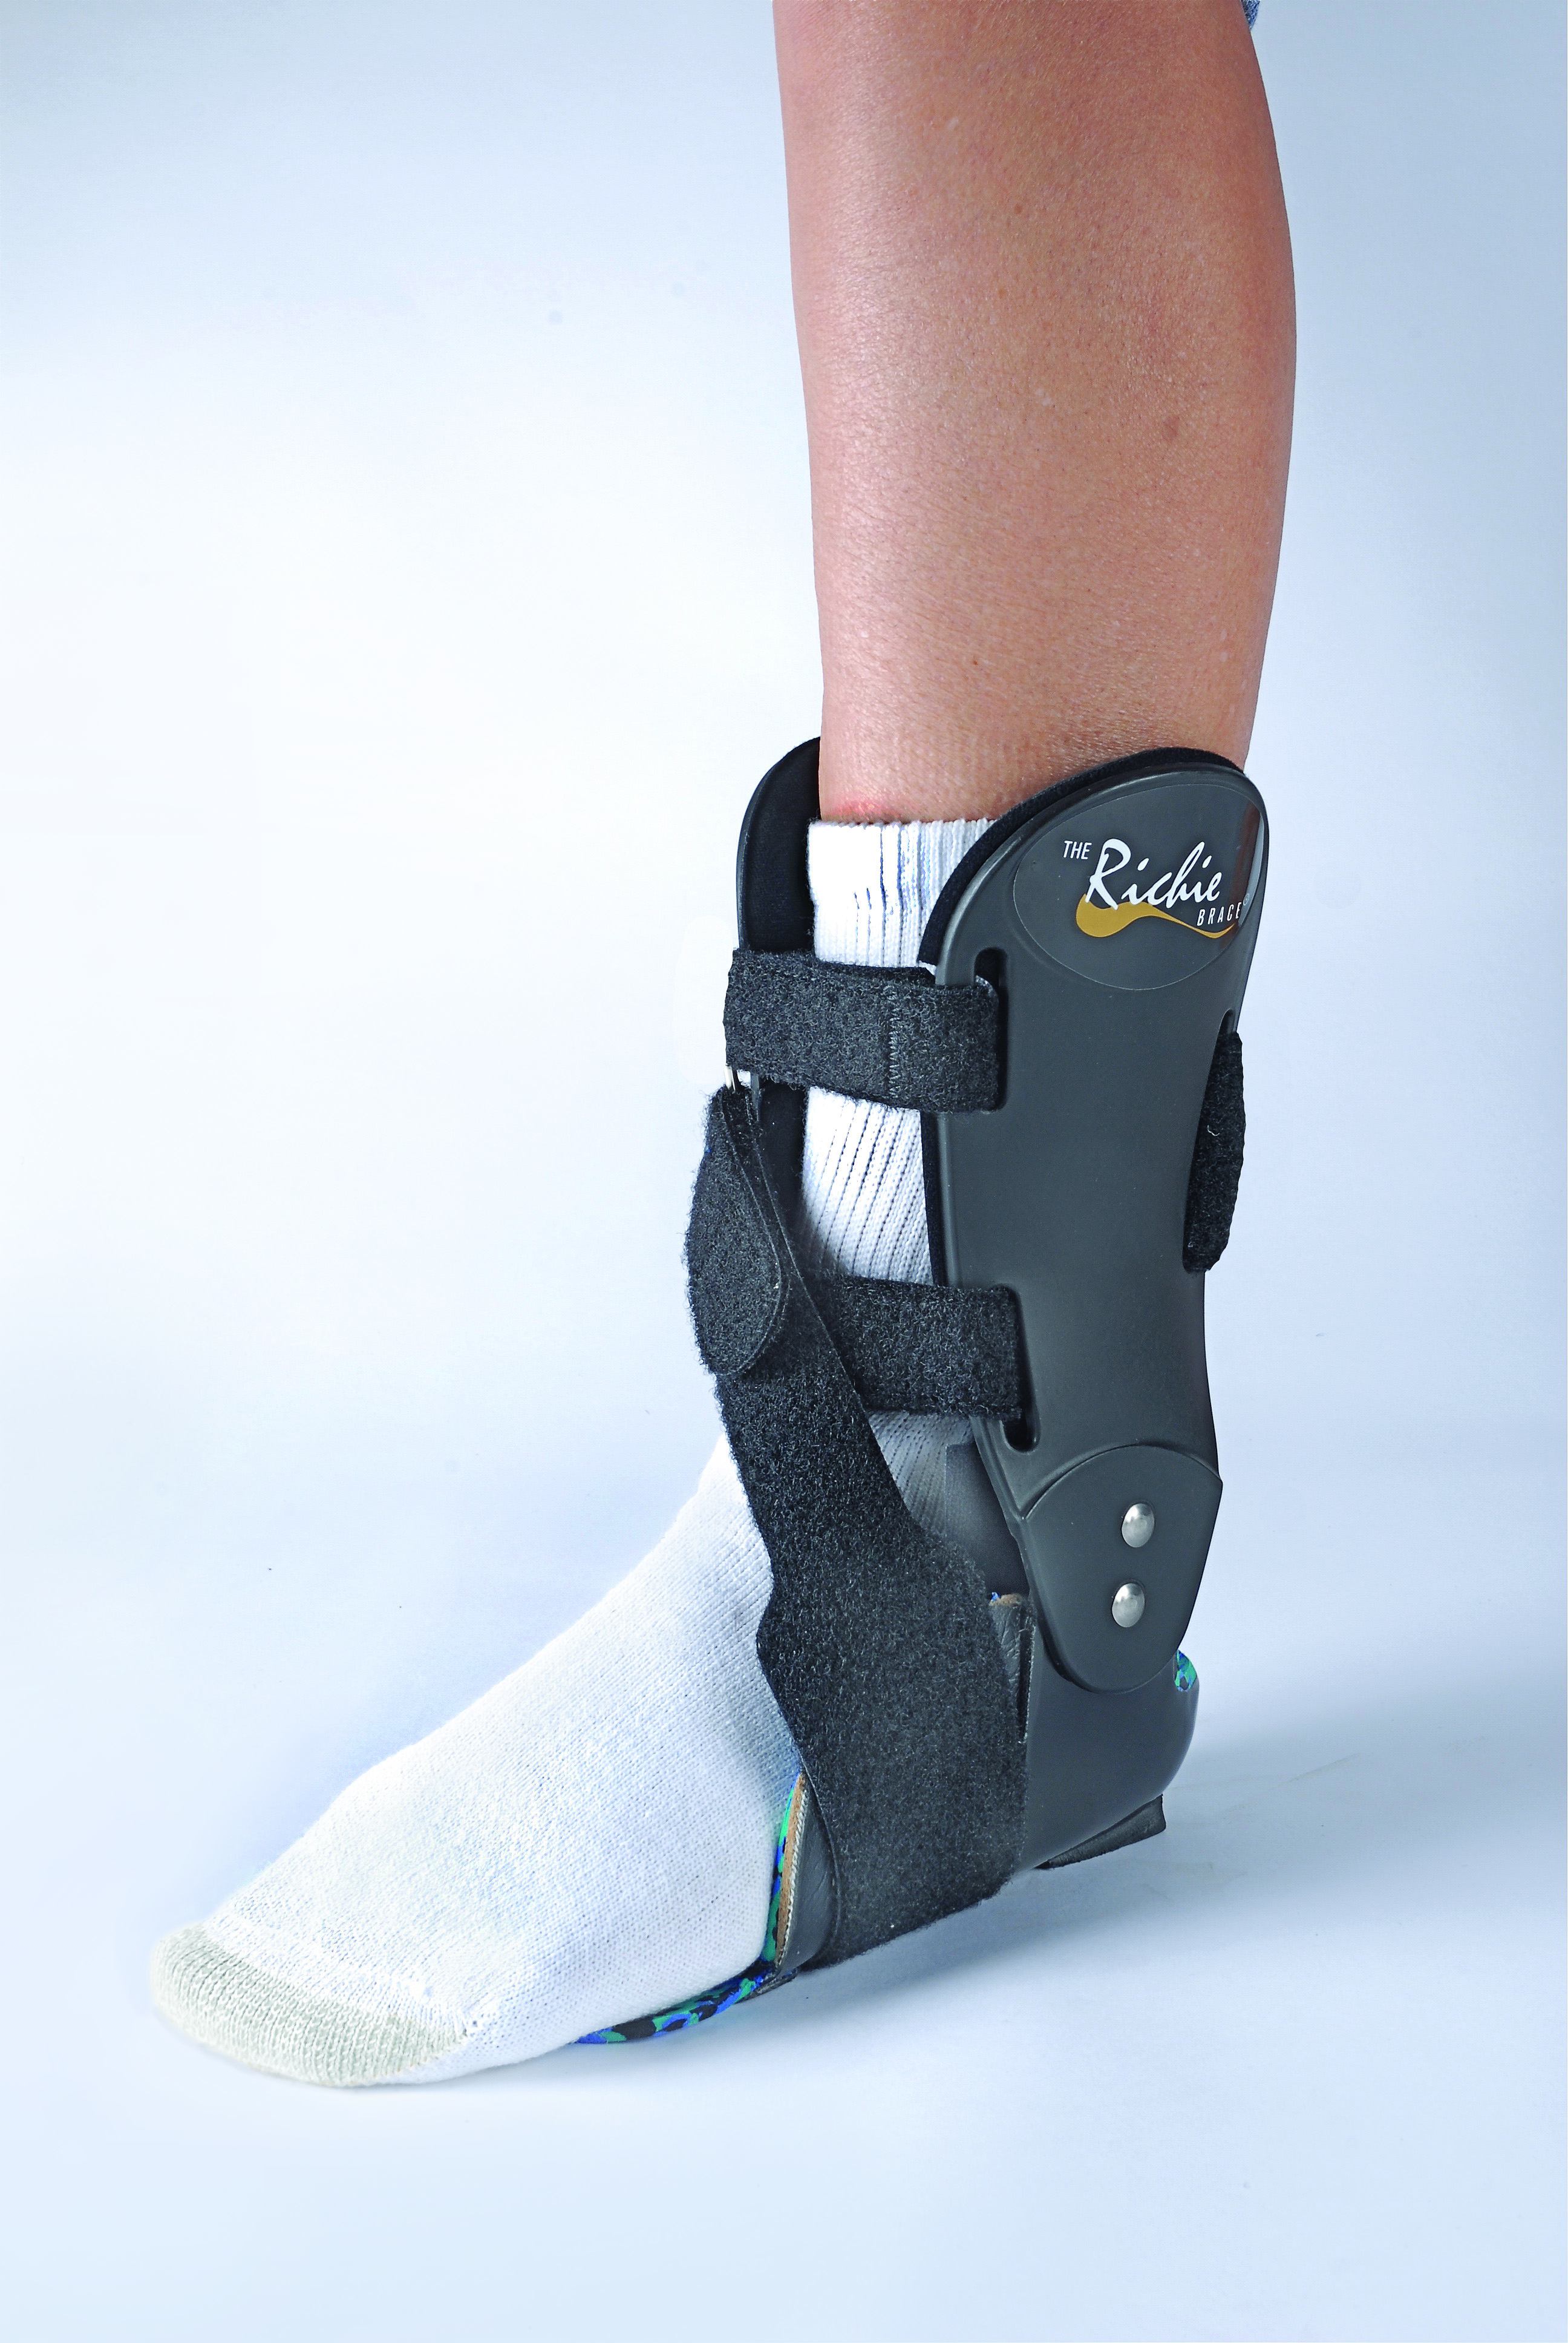 Ball of Foot Pain - Night Brace - OrthoLife